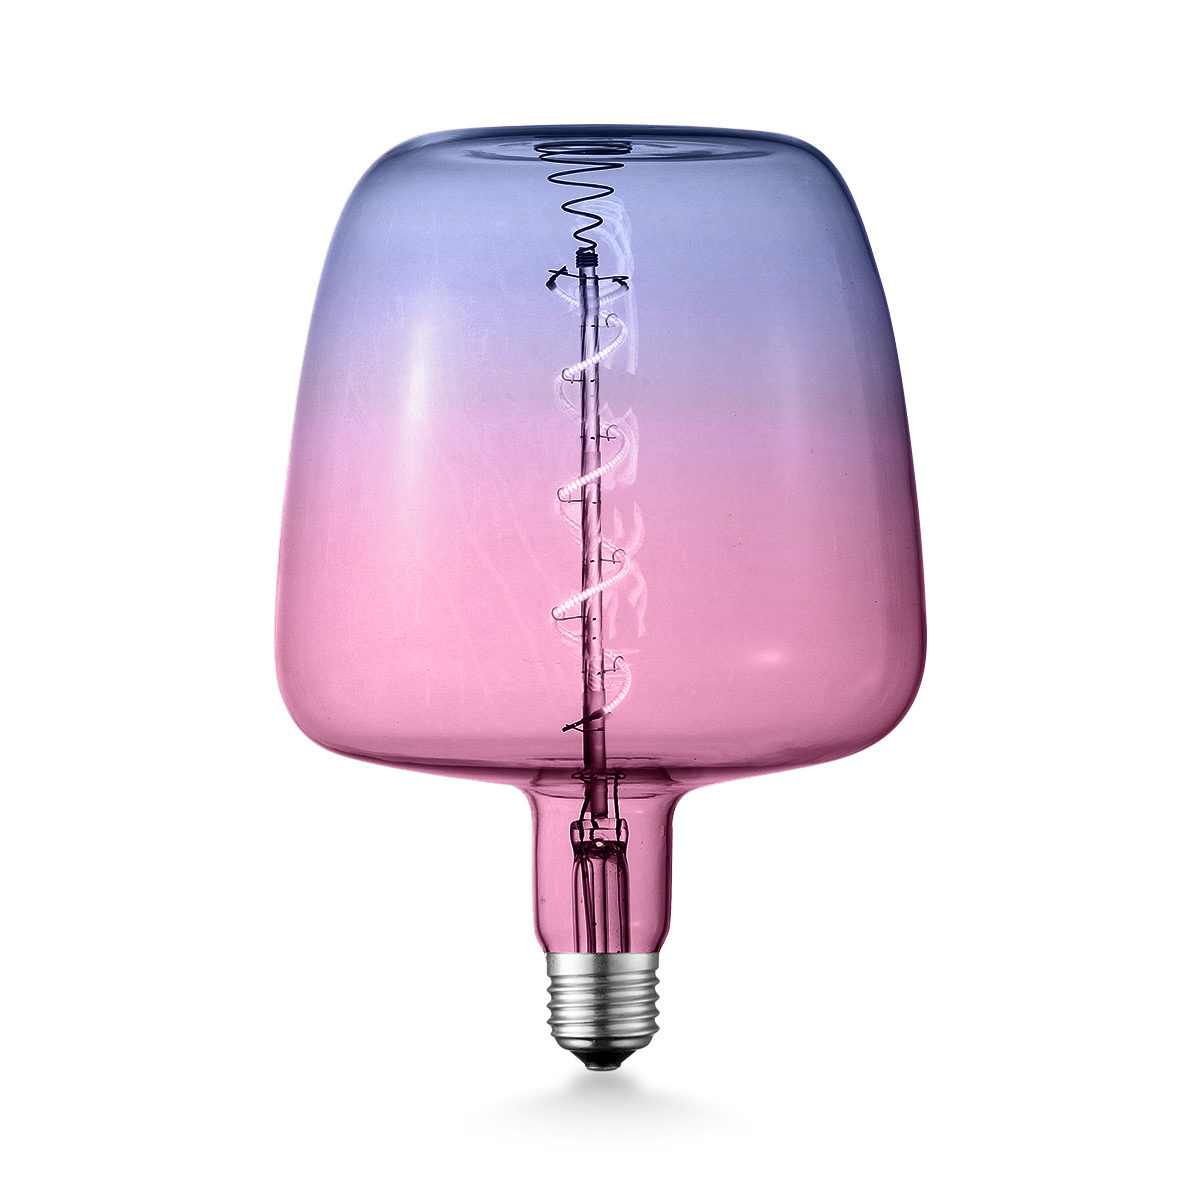 Tangla lighting - TLB-9003-04C - LED Light Bulb Single Spiral filament - 4W gradient color bulb - large - blue - non dimmable - E27